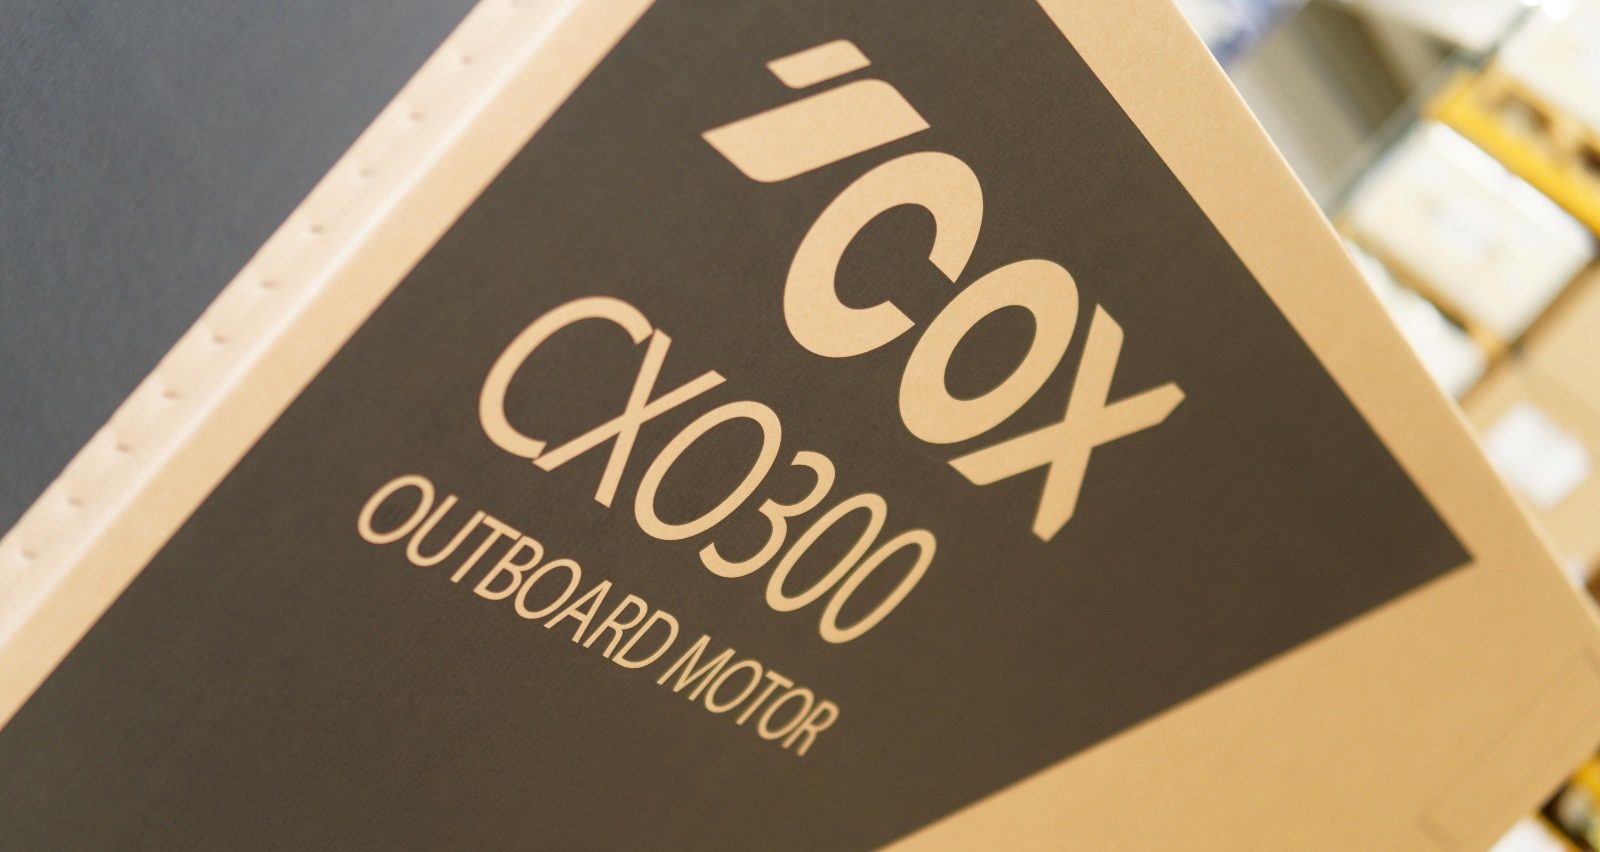 Cox Marine announces key sales appointments